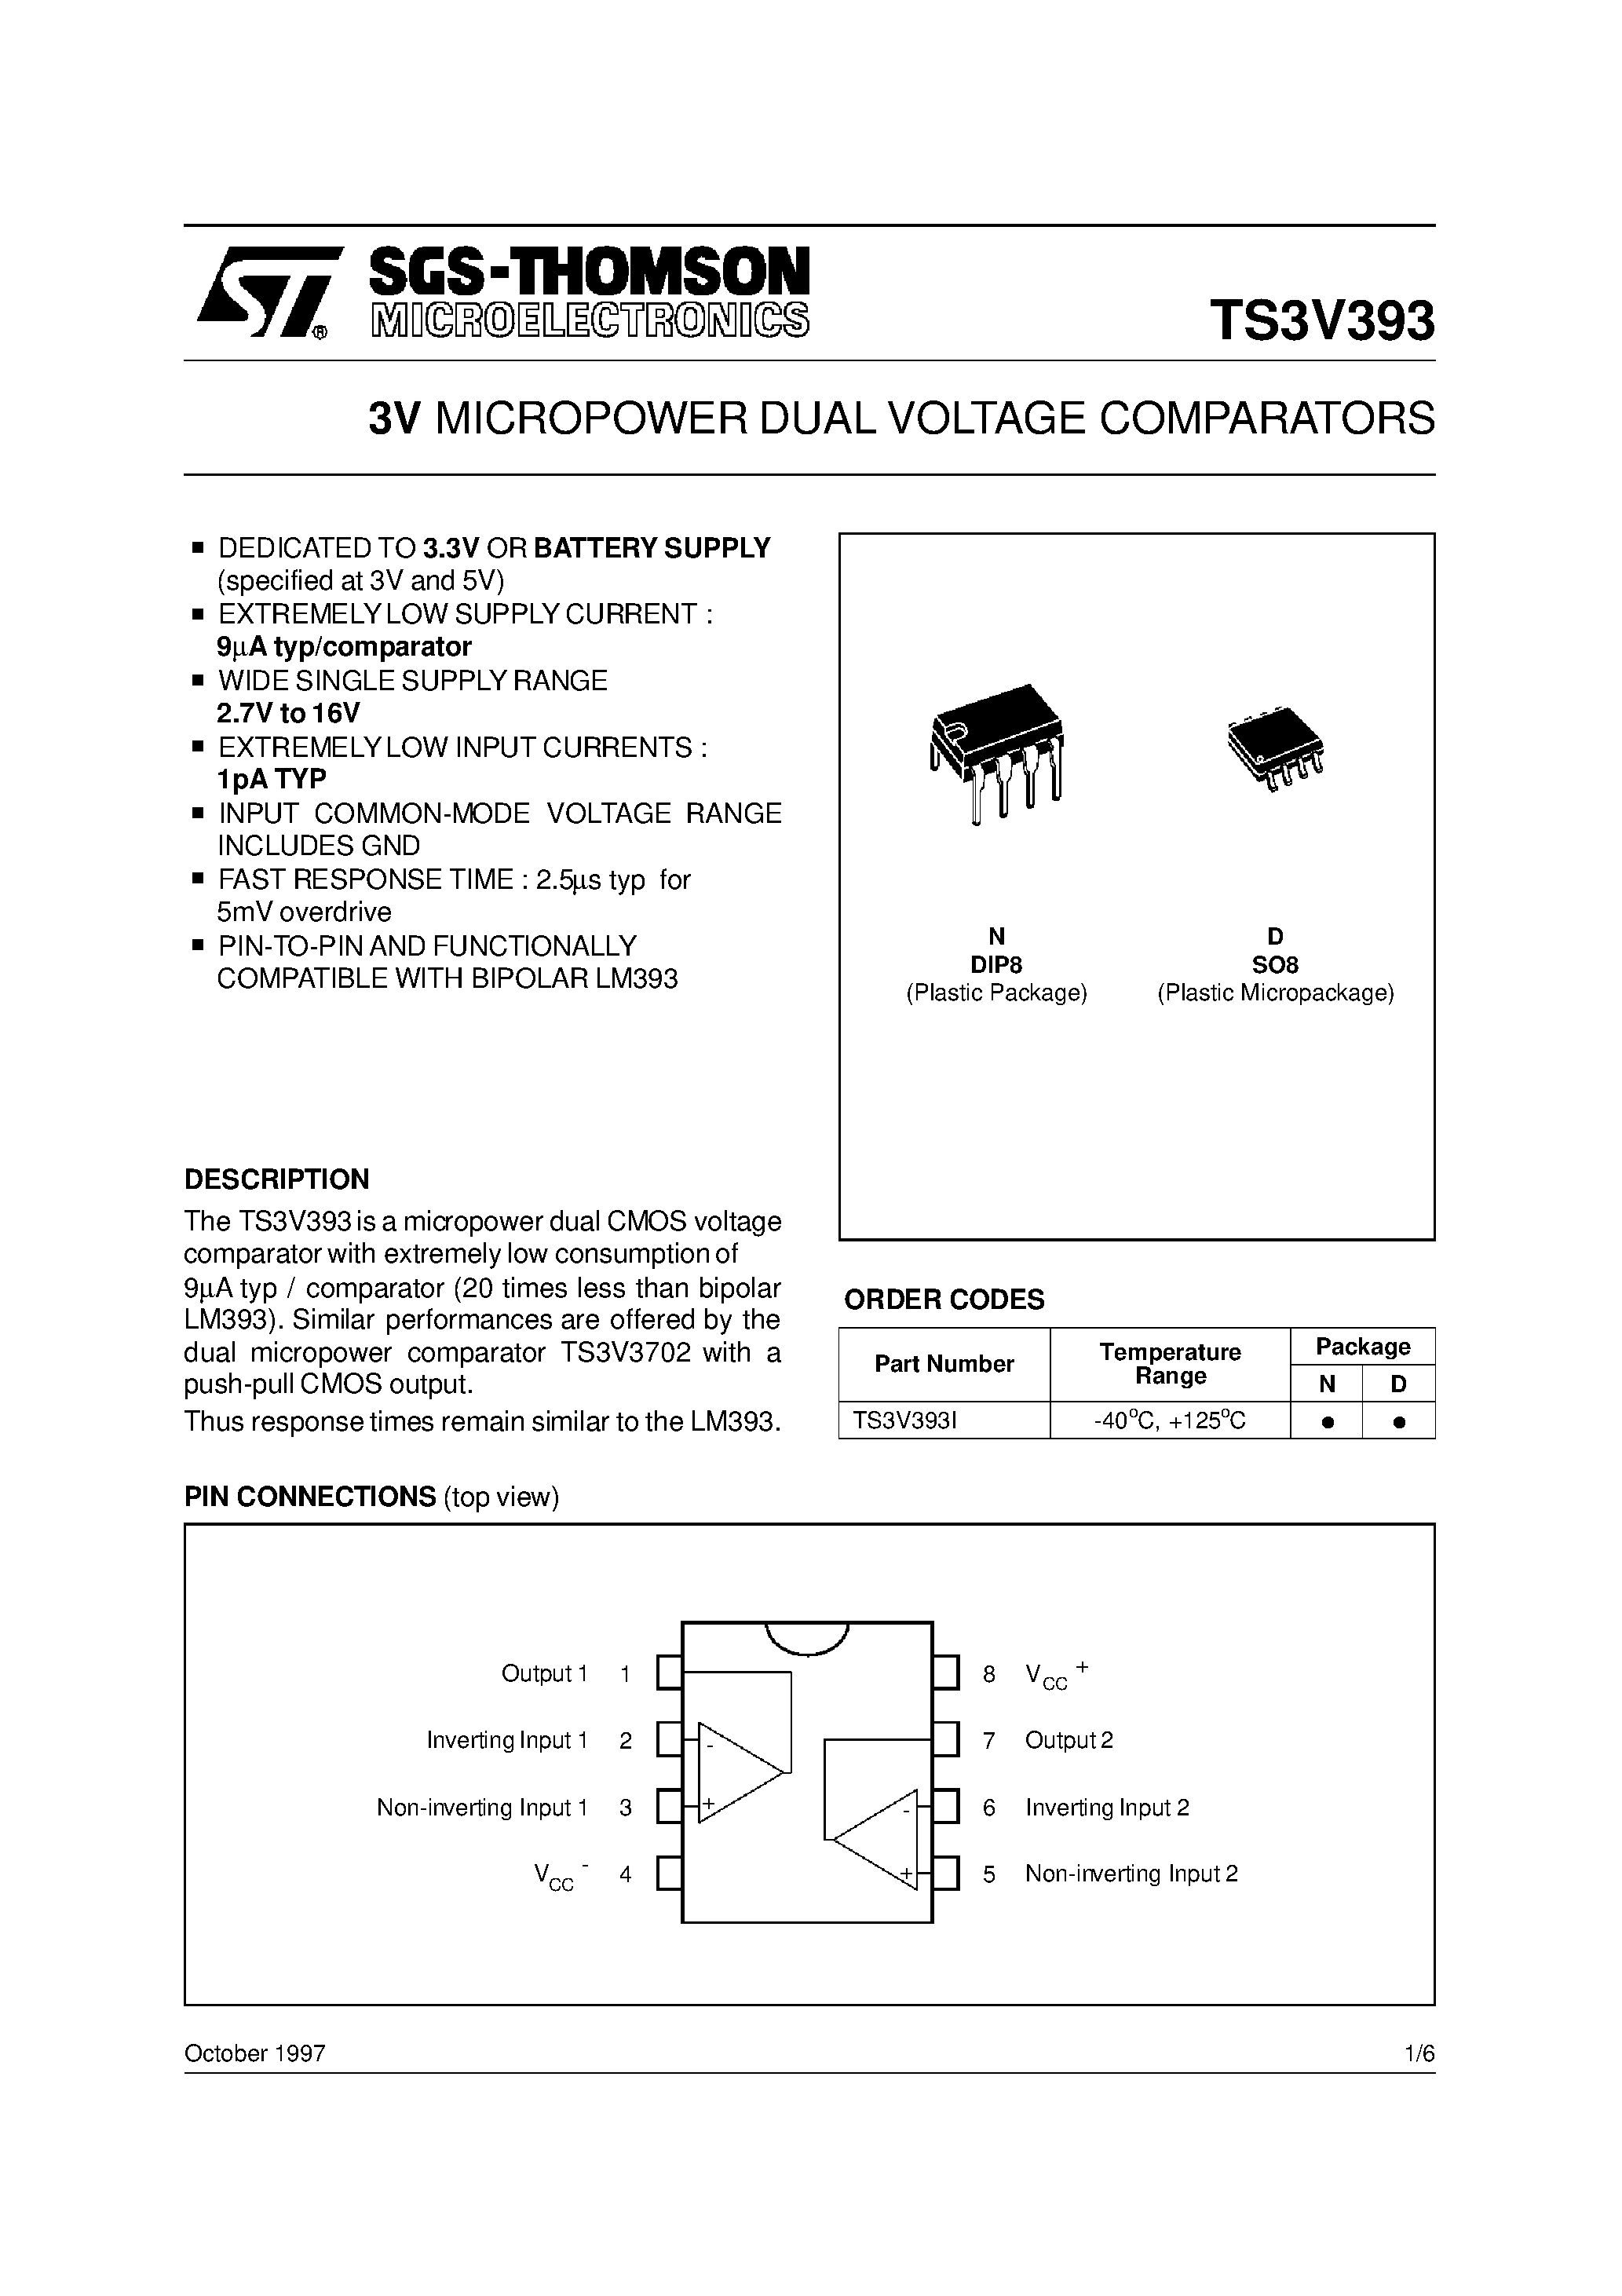 Datasheet TS3V393I - 3V MICROPOWER DUAL VOLTAGE COMPARATORS page 1